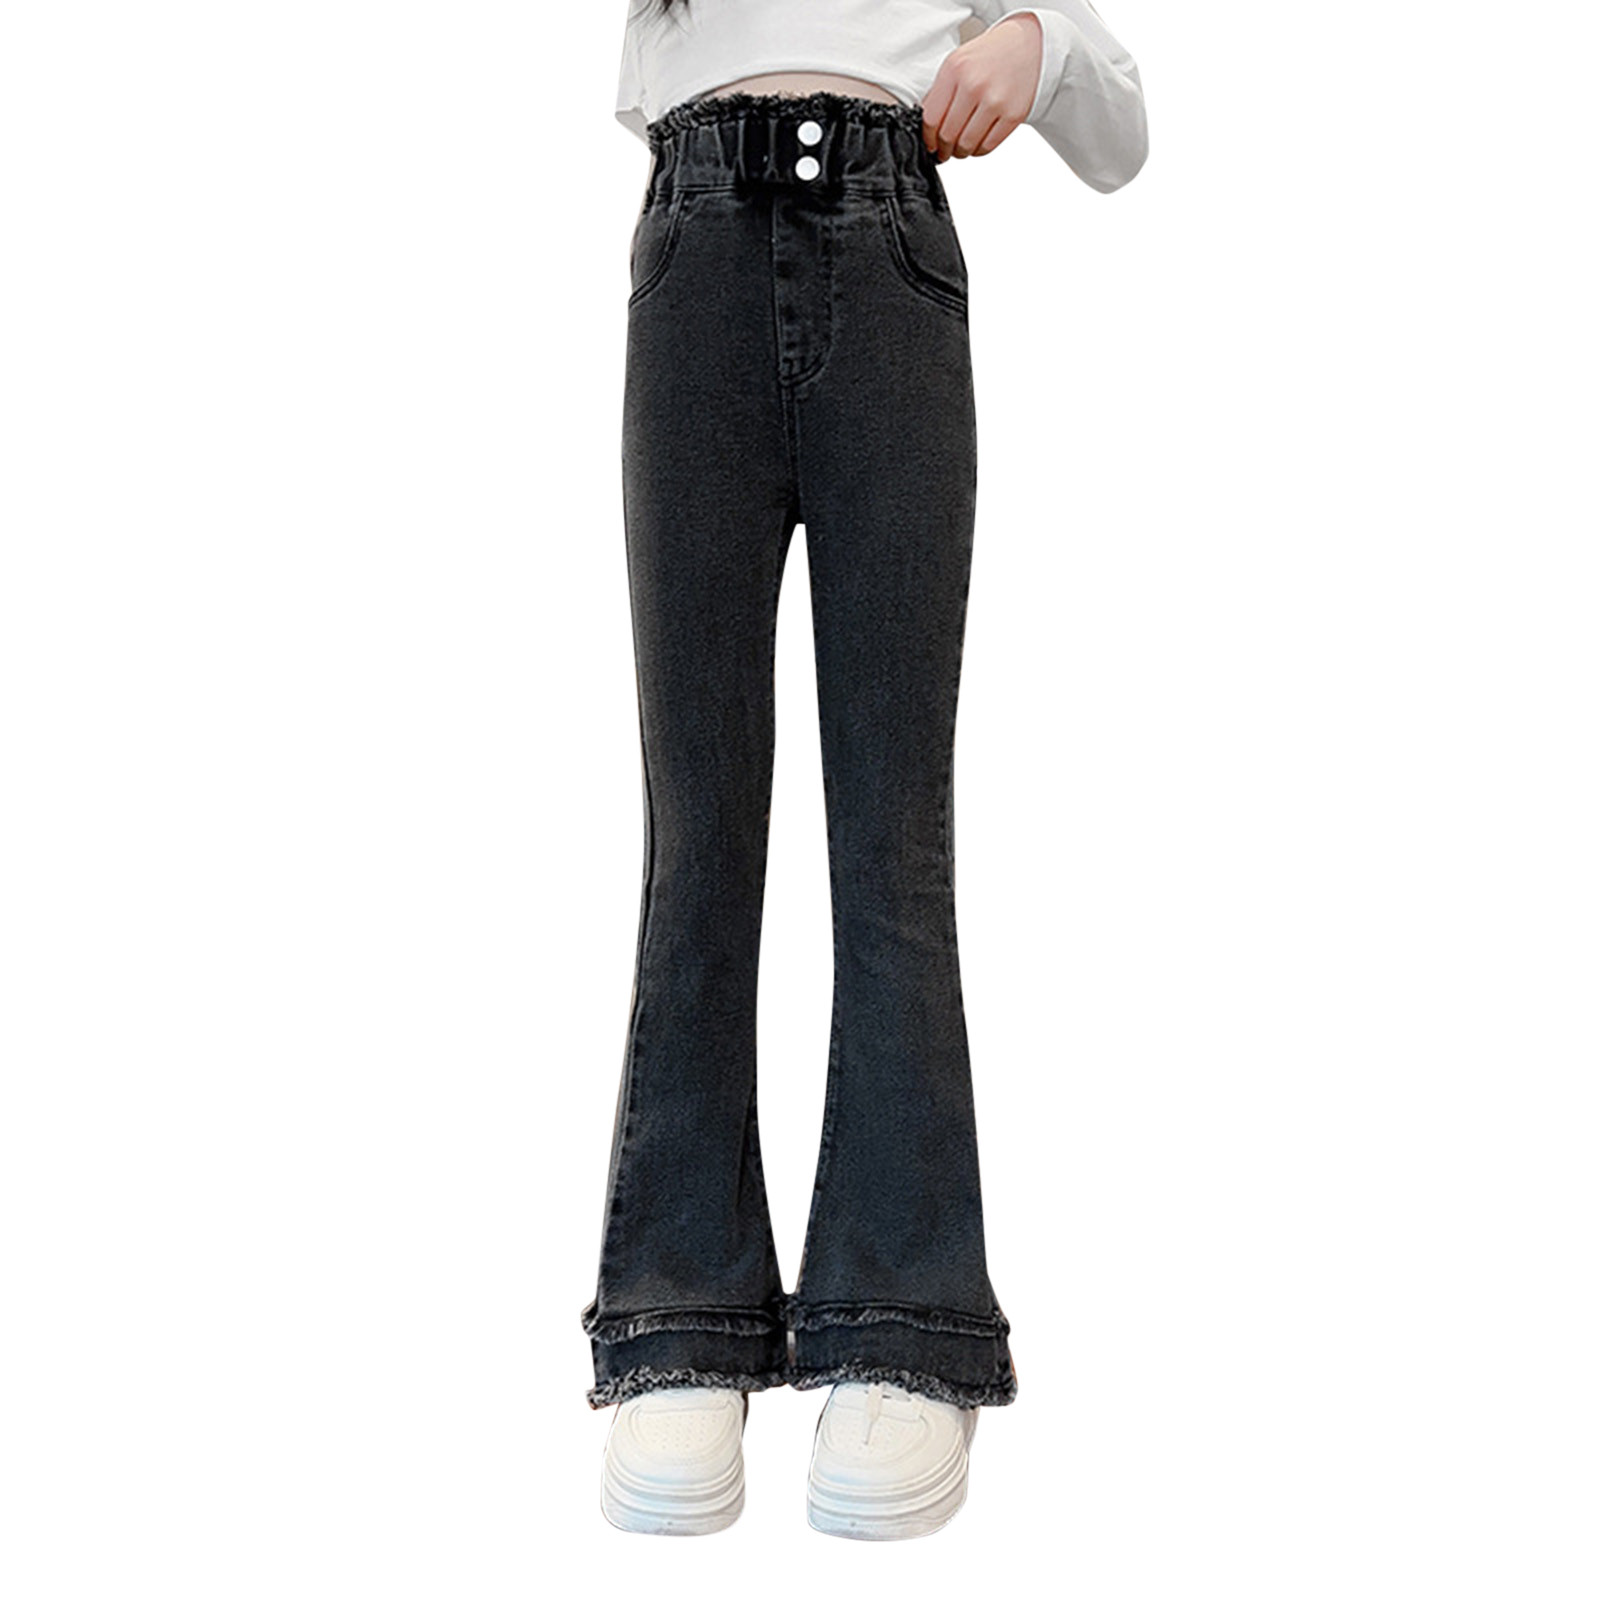 B91xZ Girls Jeans for Kids Waist Flare Leg Pants Casual Long Bell ...